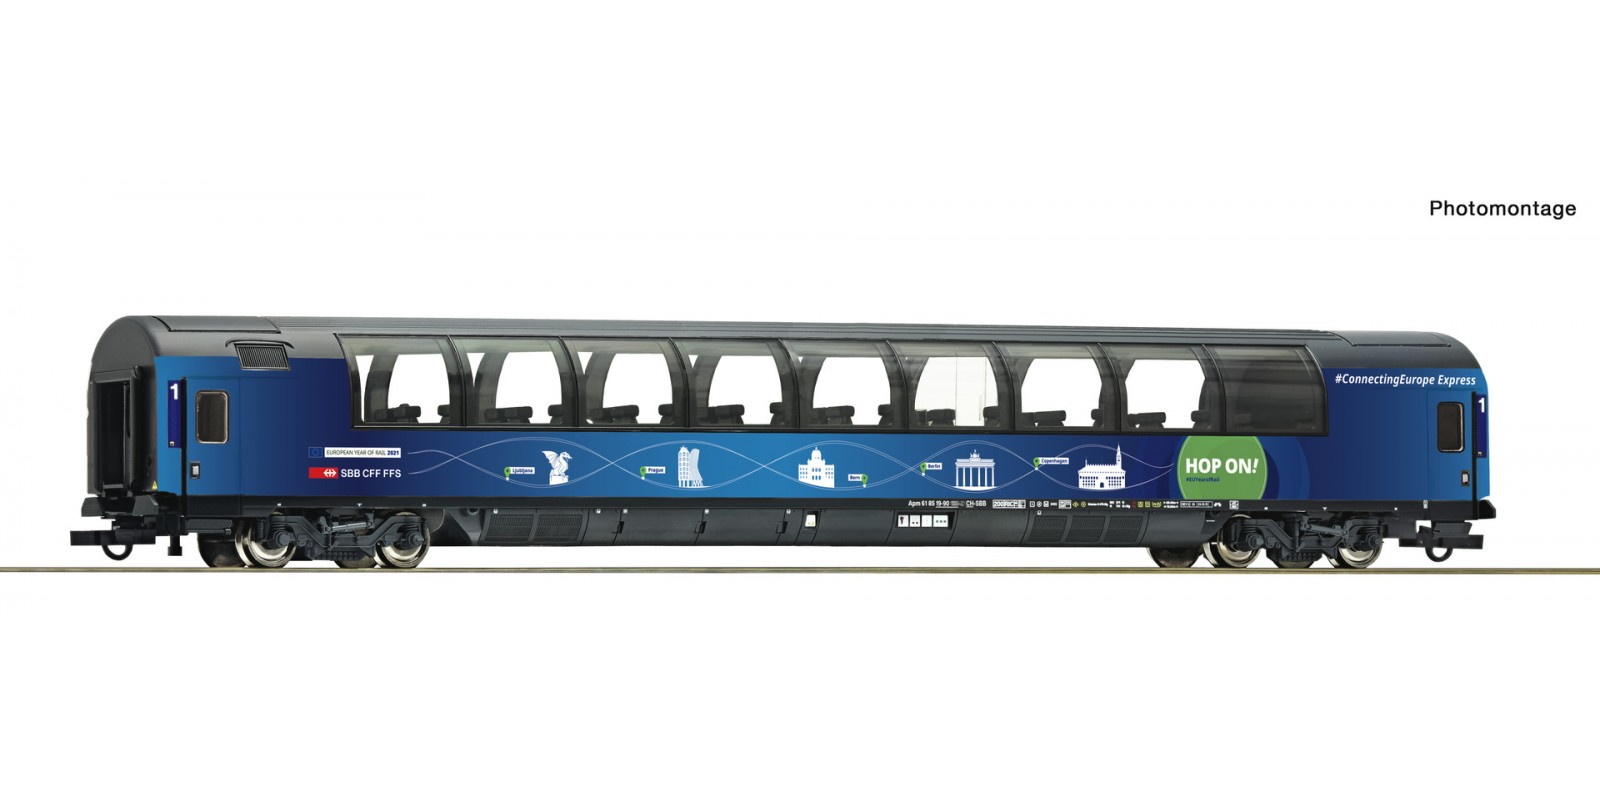 RO6200015 Panorama coach “Connecting Europe Express”, SBB